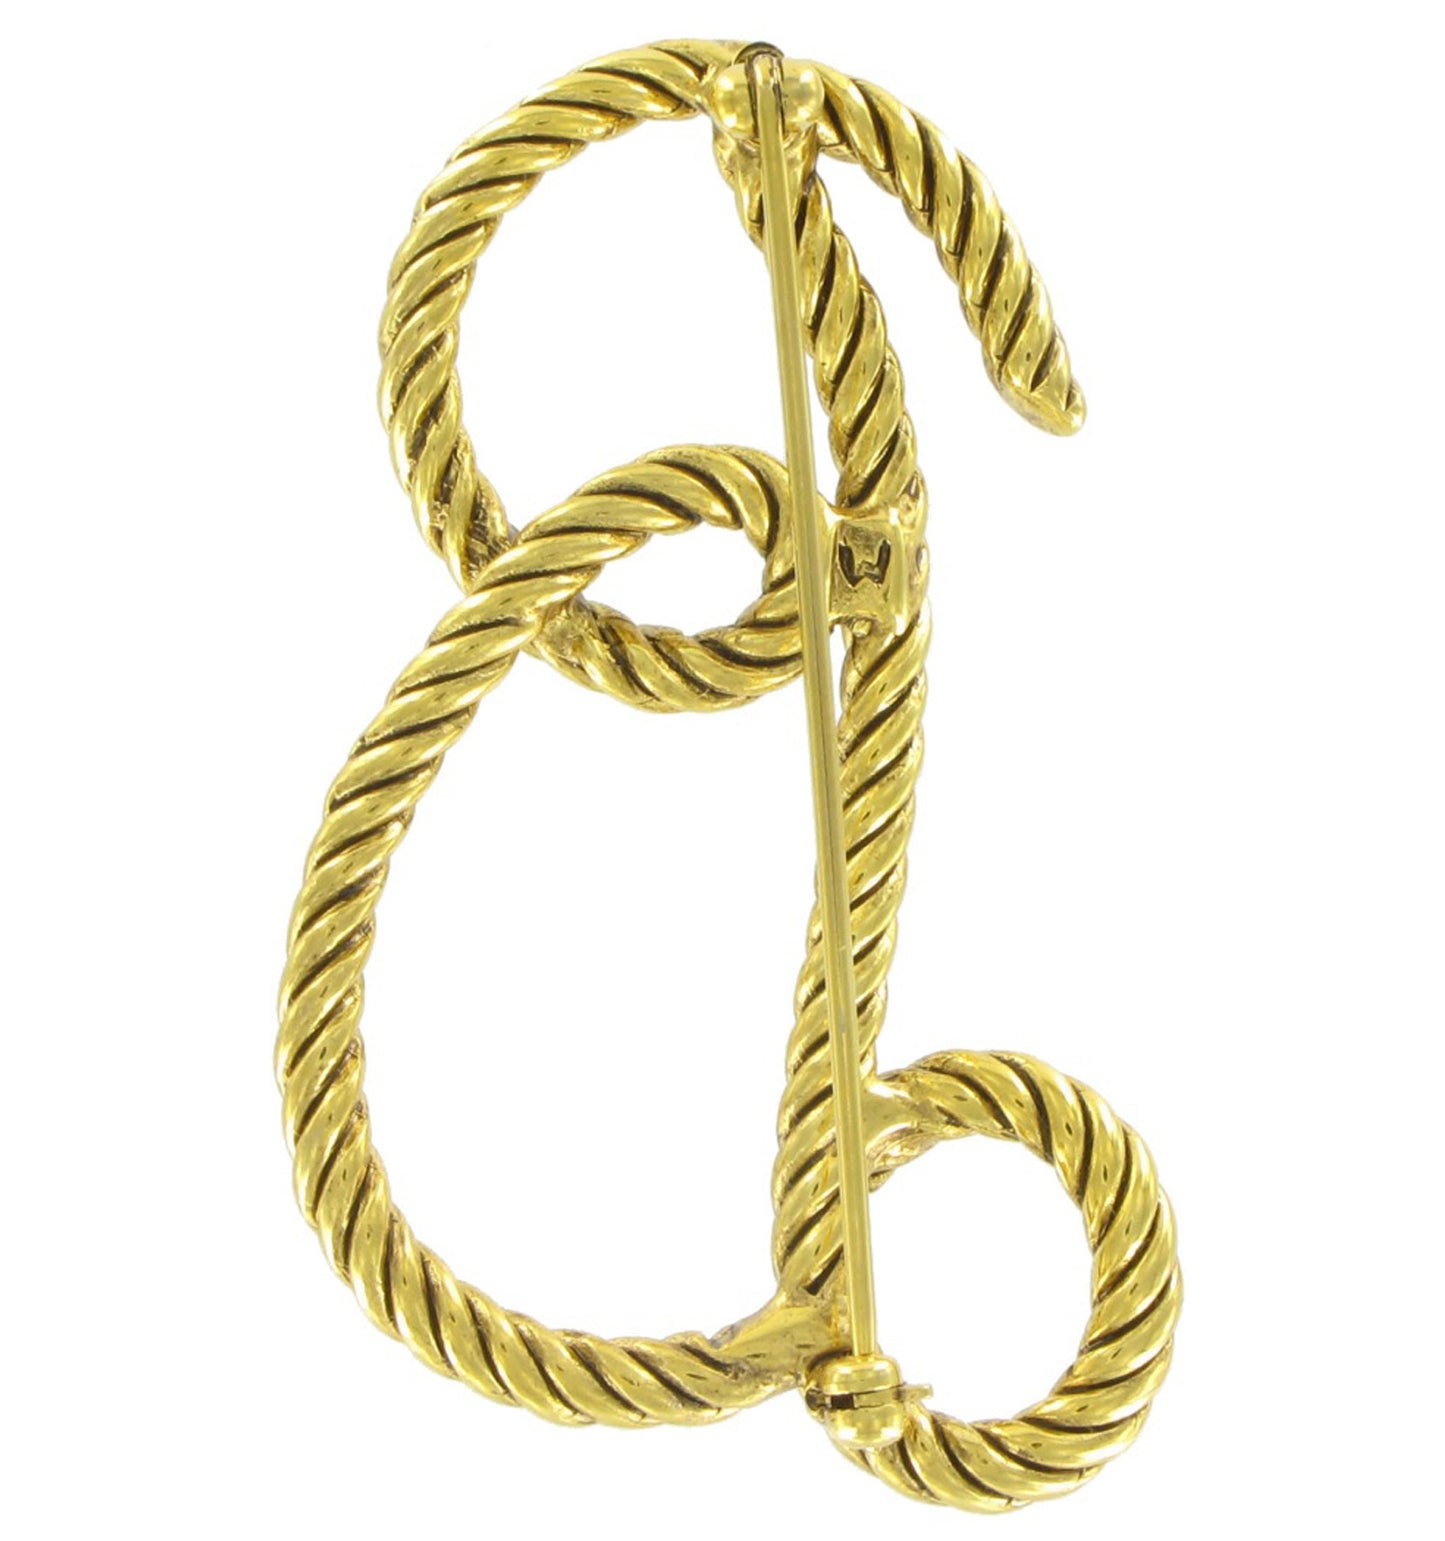 Large Script Gold Tone Rope Initial "B" Pin Brooch 2 1/2"